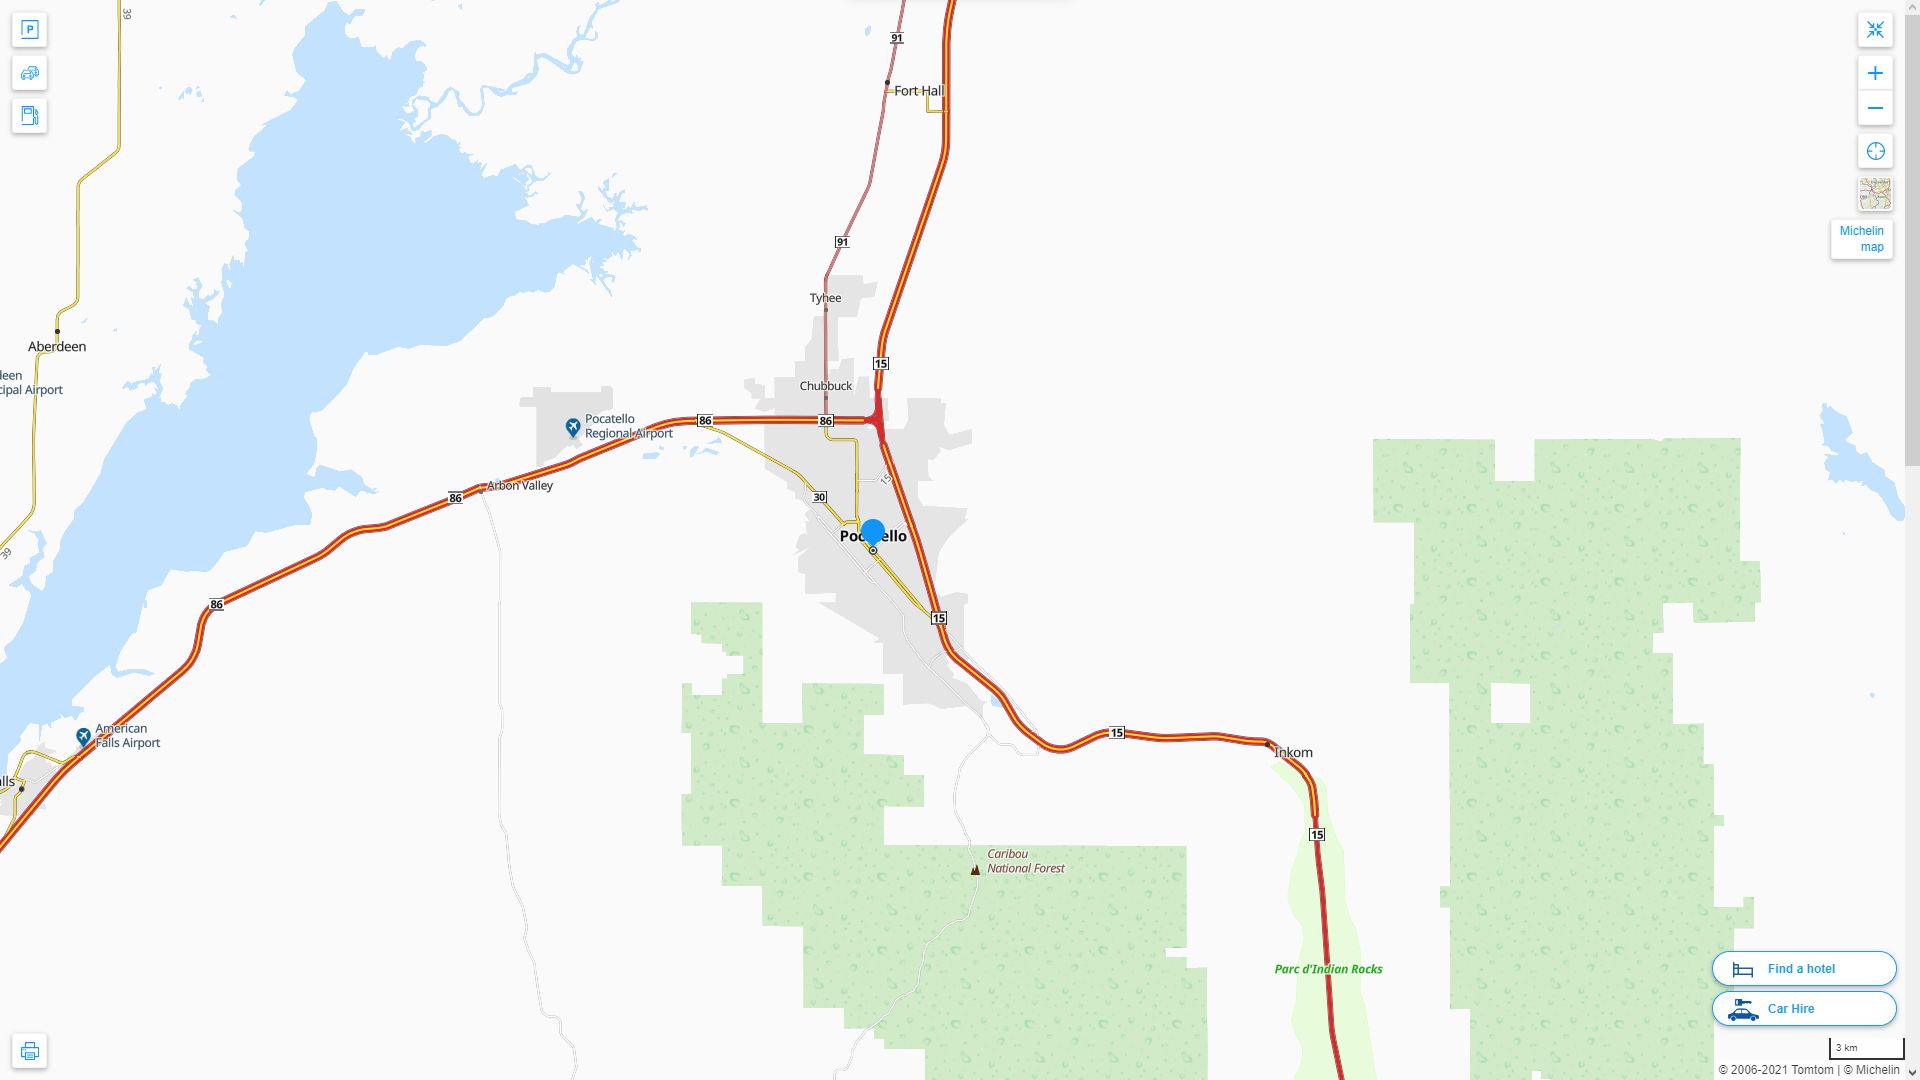 Pocatello idaho Highway and Road Map